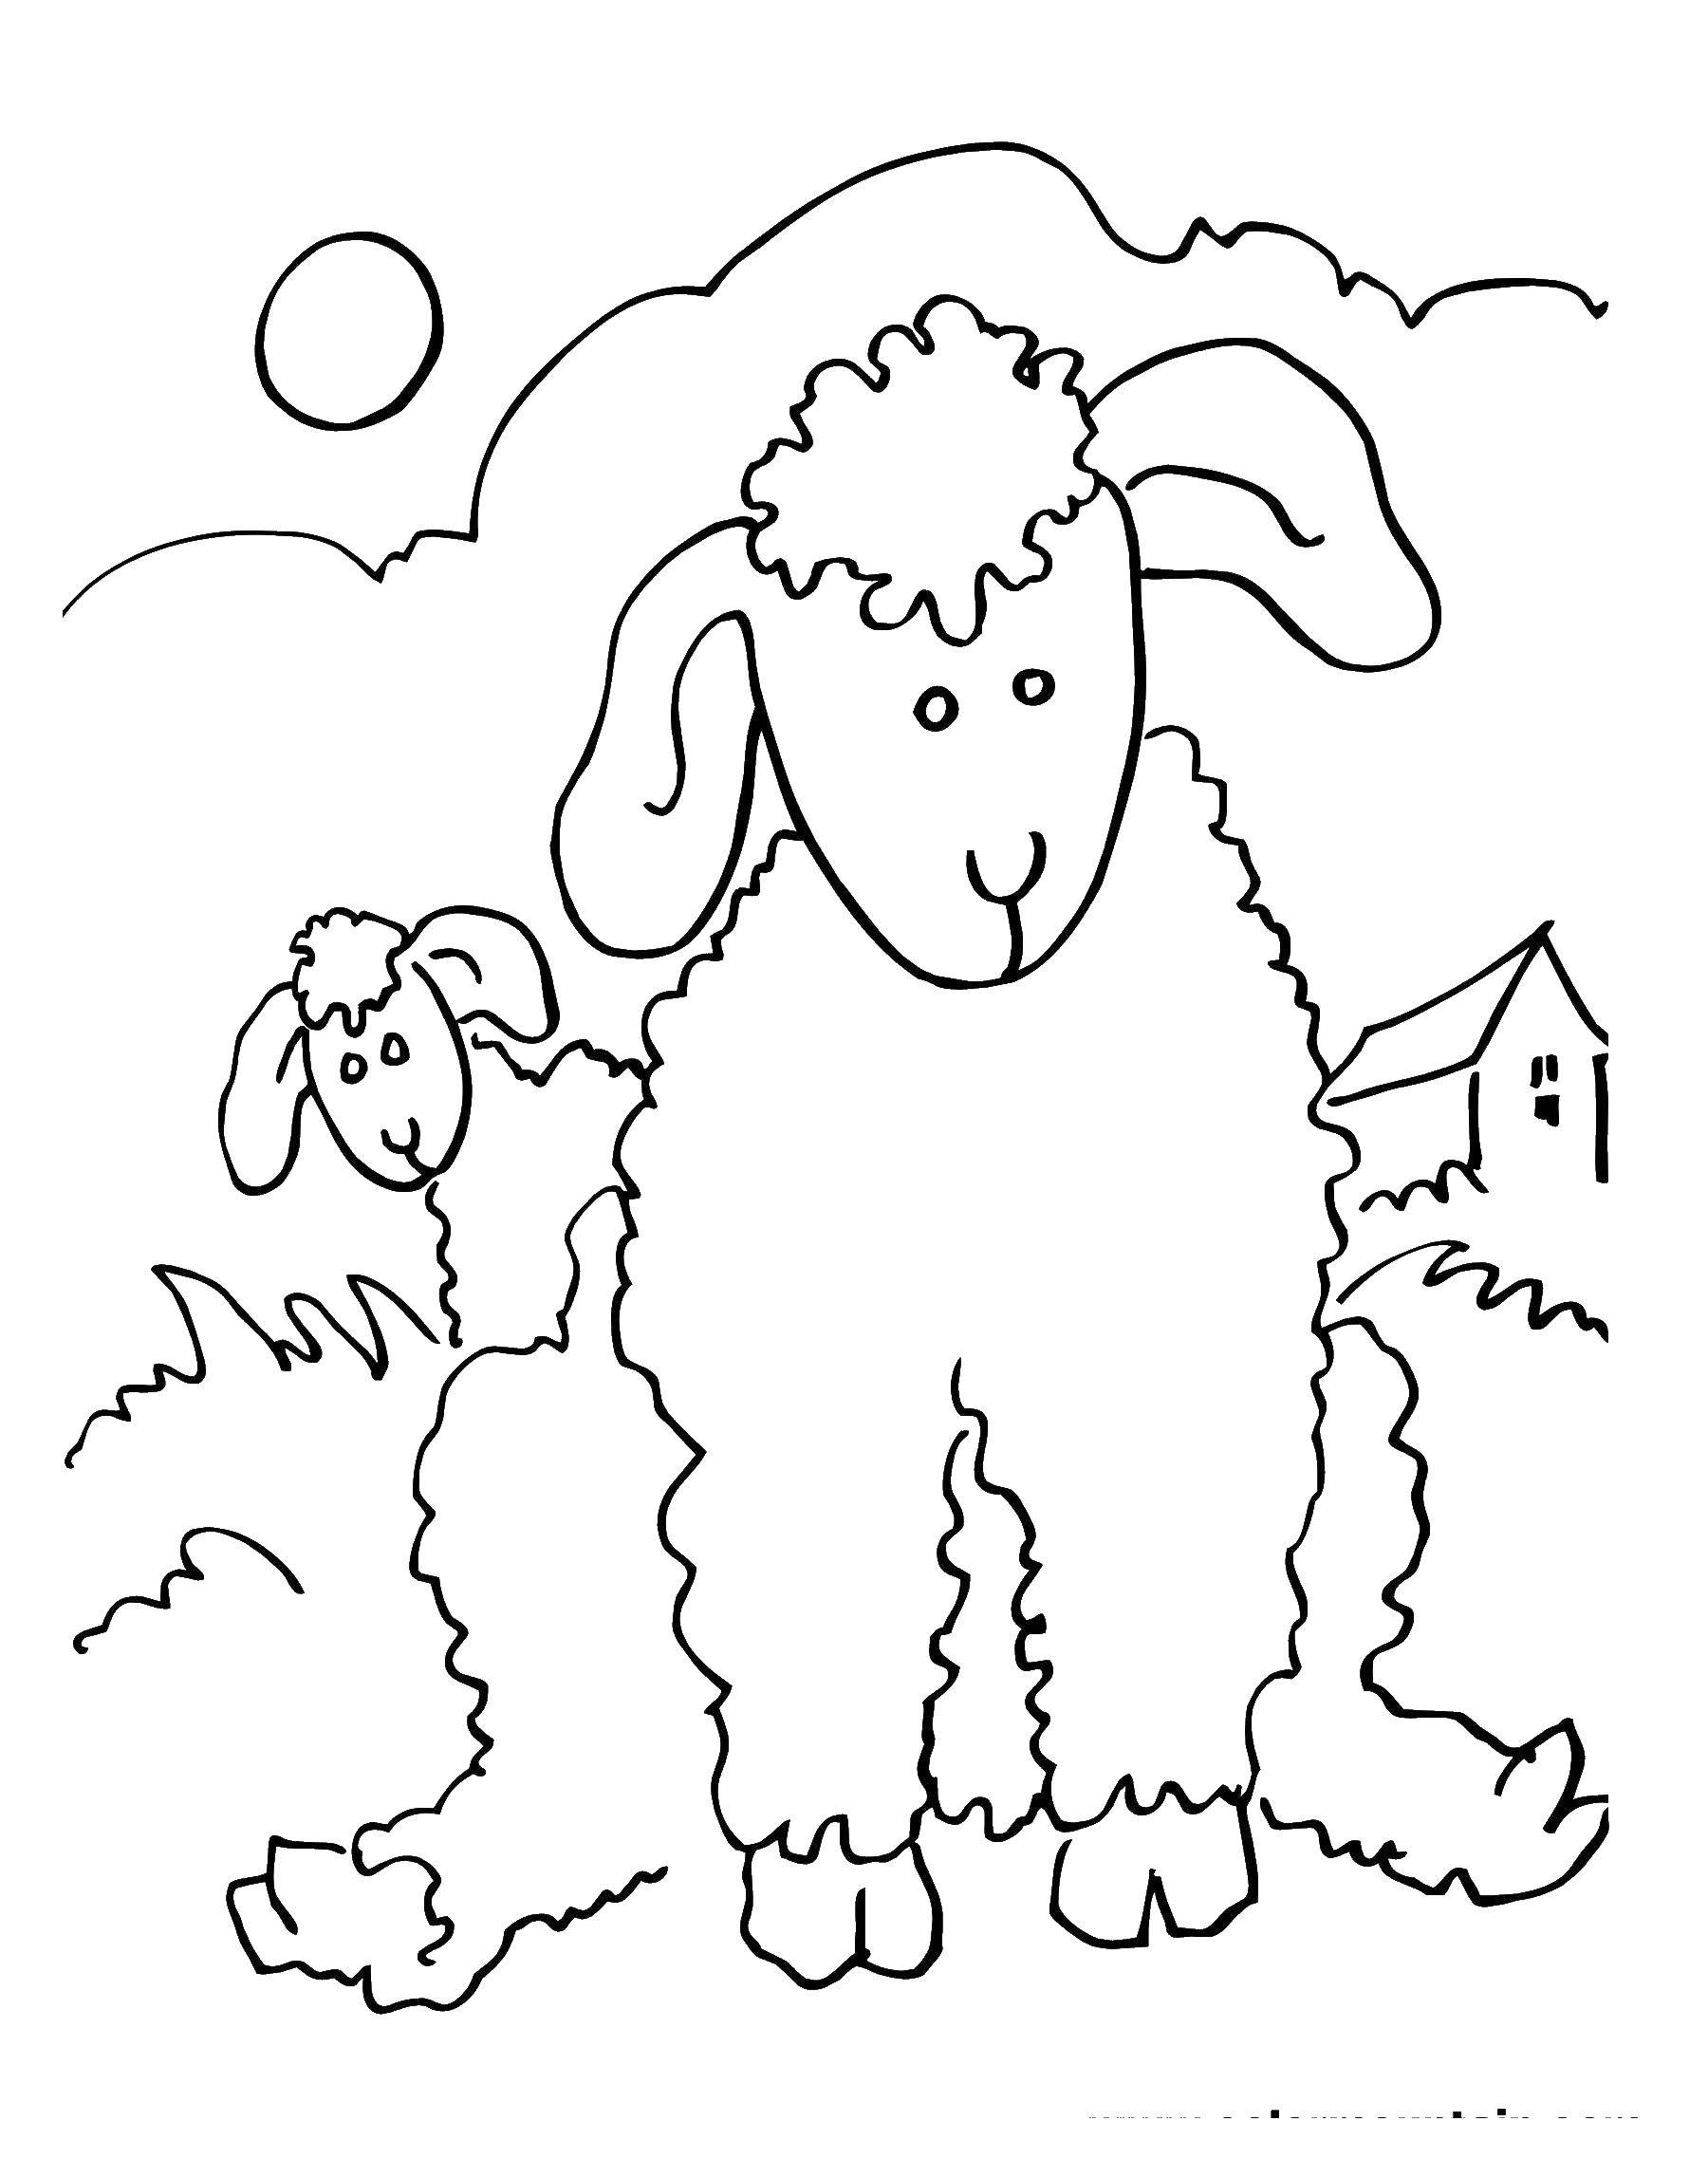 Coloring Sheep. Category Animals. Tags:  sheep.